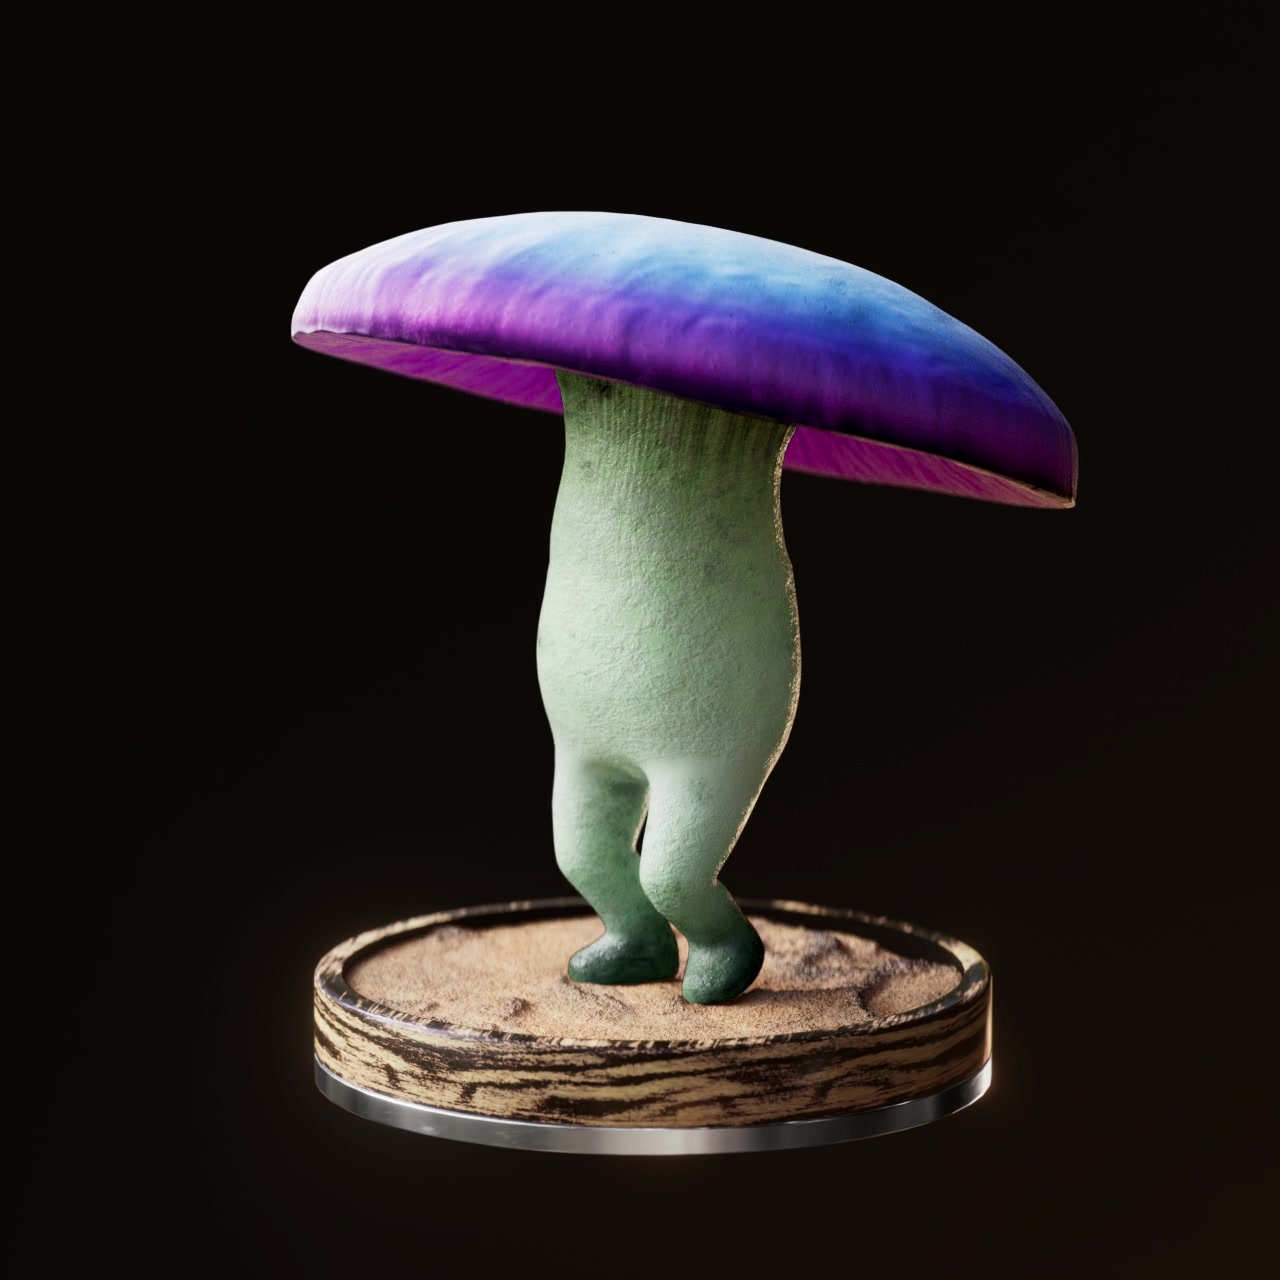 Fungi #6063